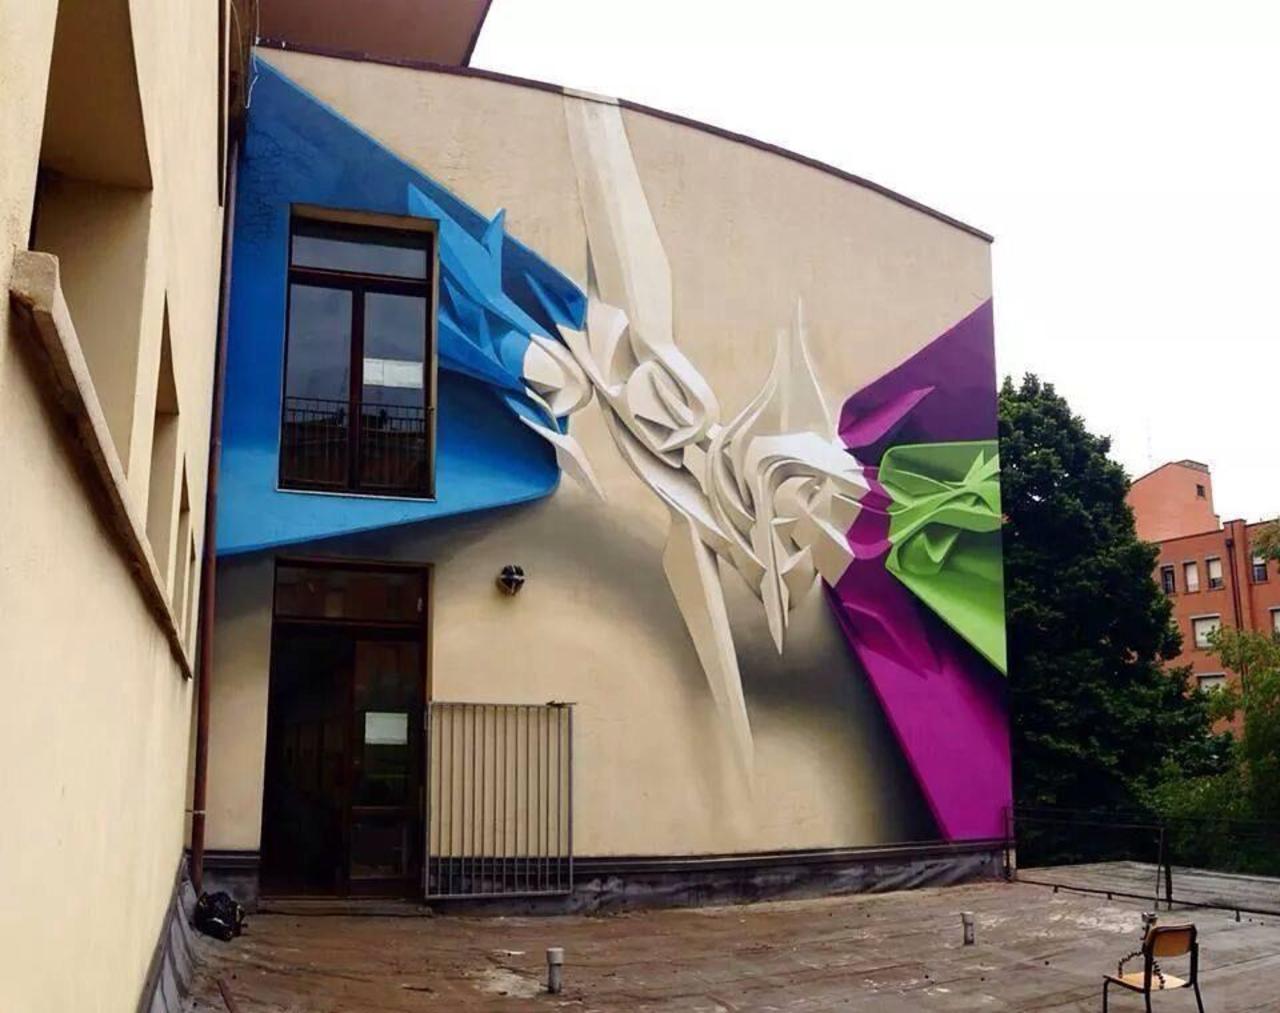 RT @designopinion: Artist @peeta3D amazing Street Art piece in Italy #art #mural #graffiti #streetart http://t.co/dXo311M5FY